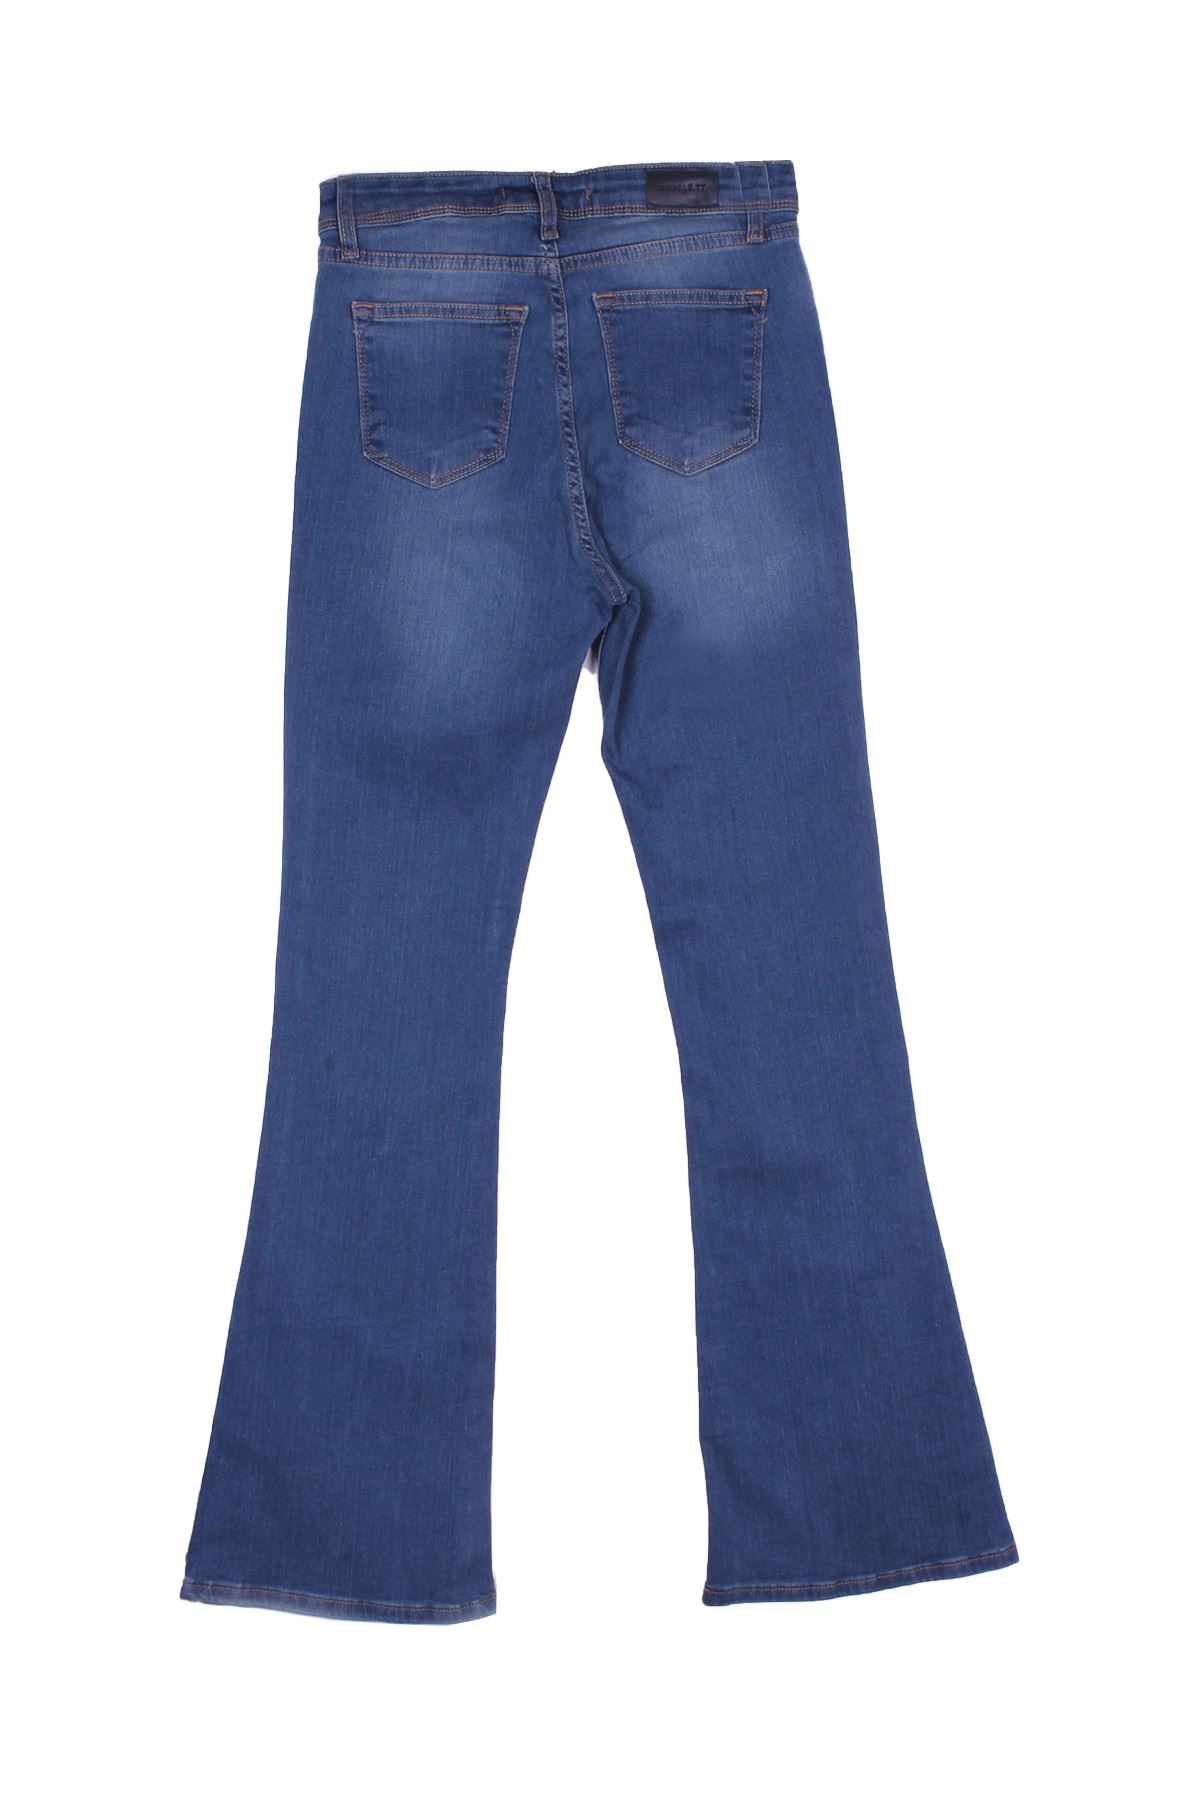 Giyinsen Kadın Mavi Jean Pantolon - 23KD52000010